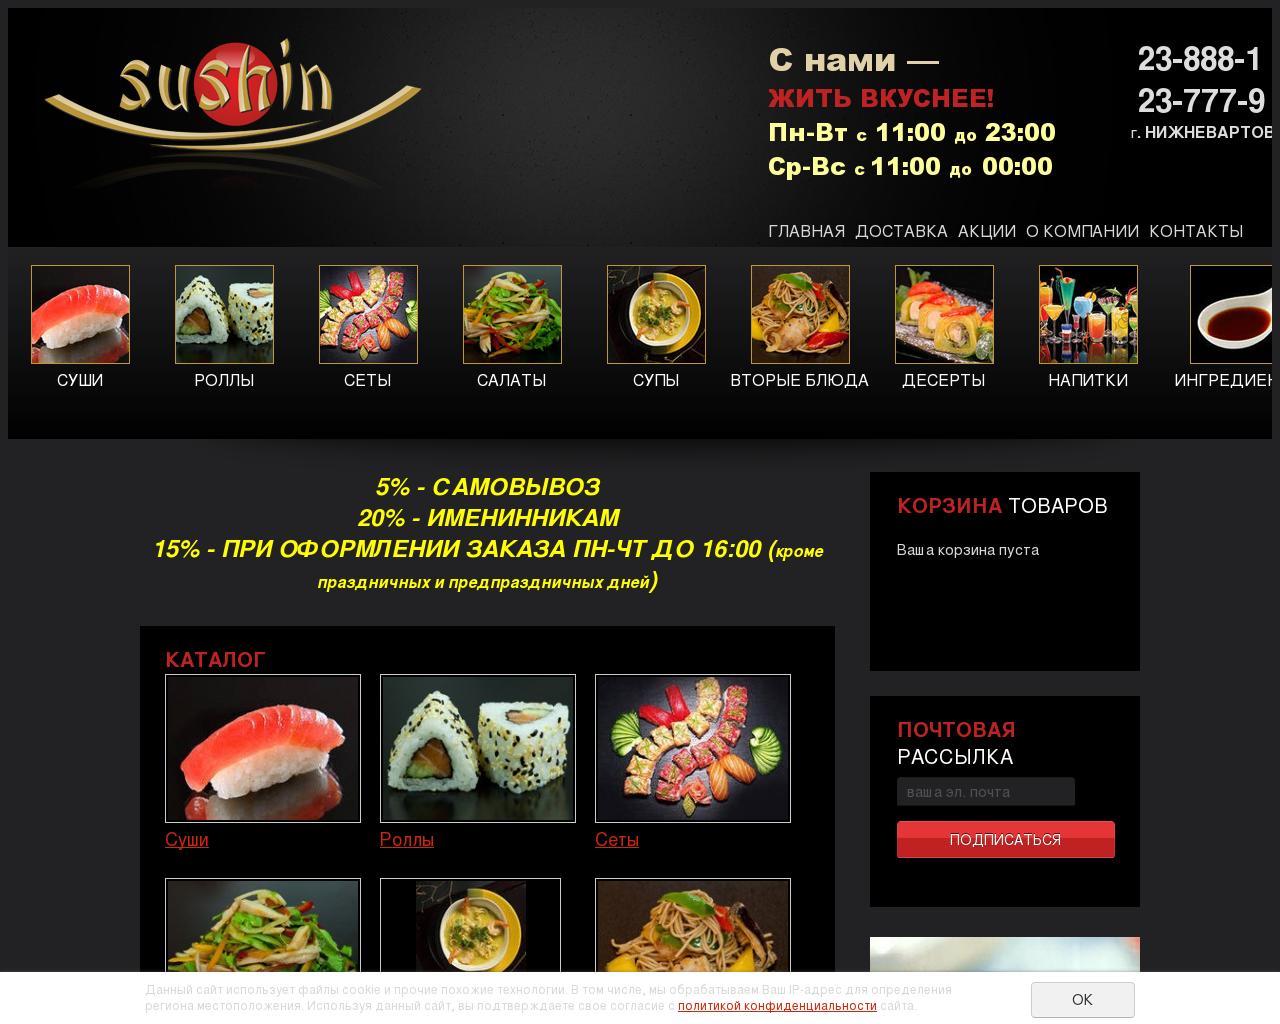 Изображение сайта sushin86.ru в разрешении 1280x1024